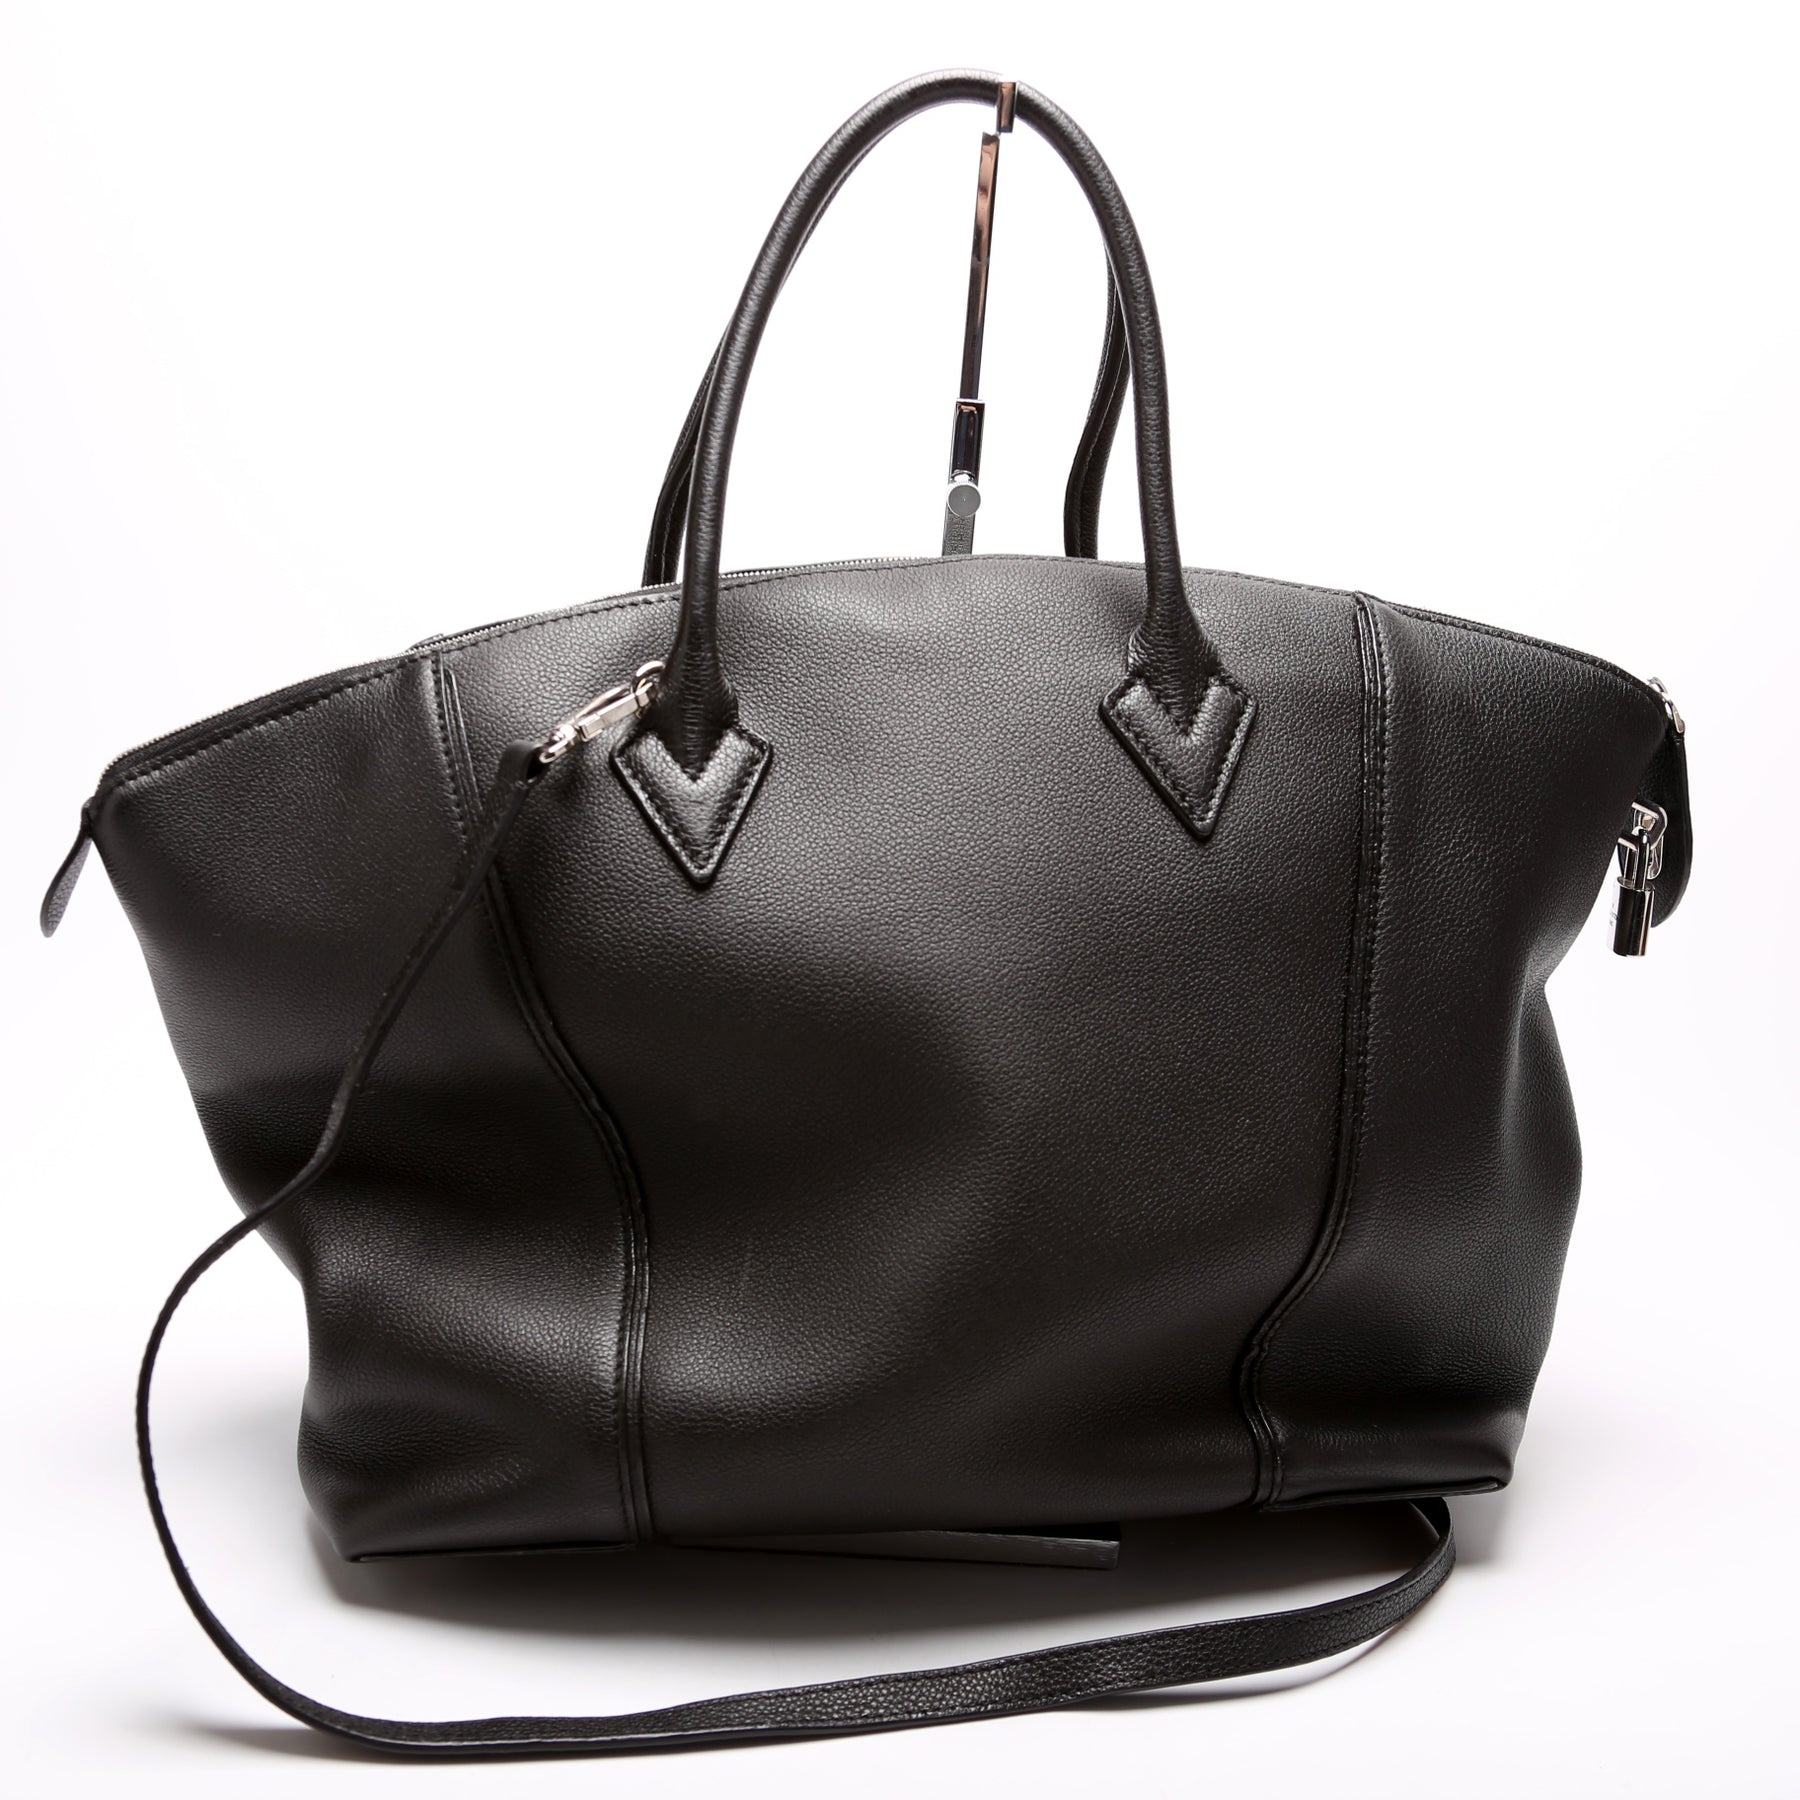 Soft Lockit leather handbag